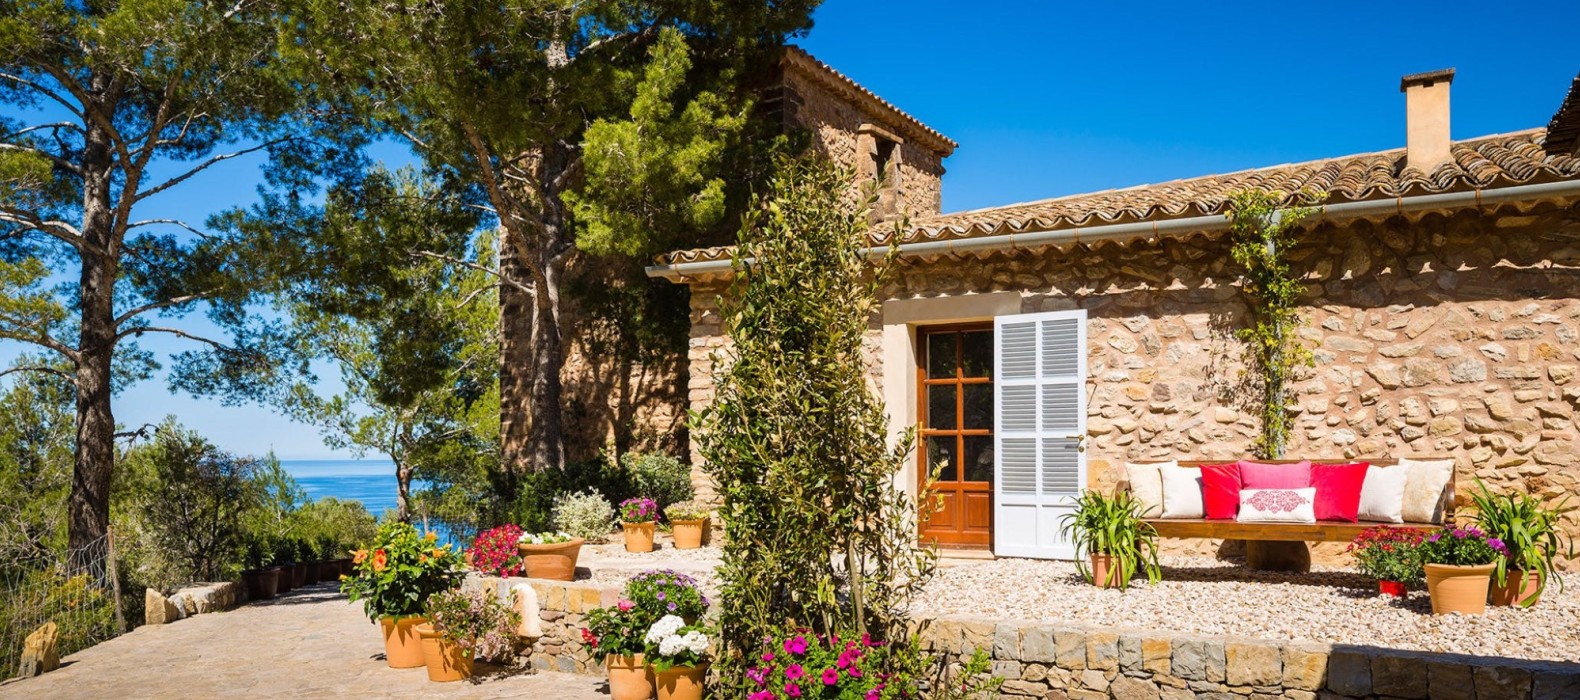 Garden view of Villa Sundance in Mallorca